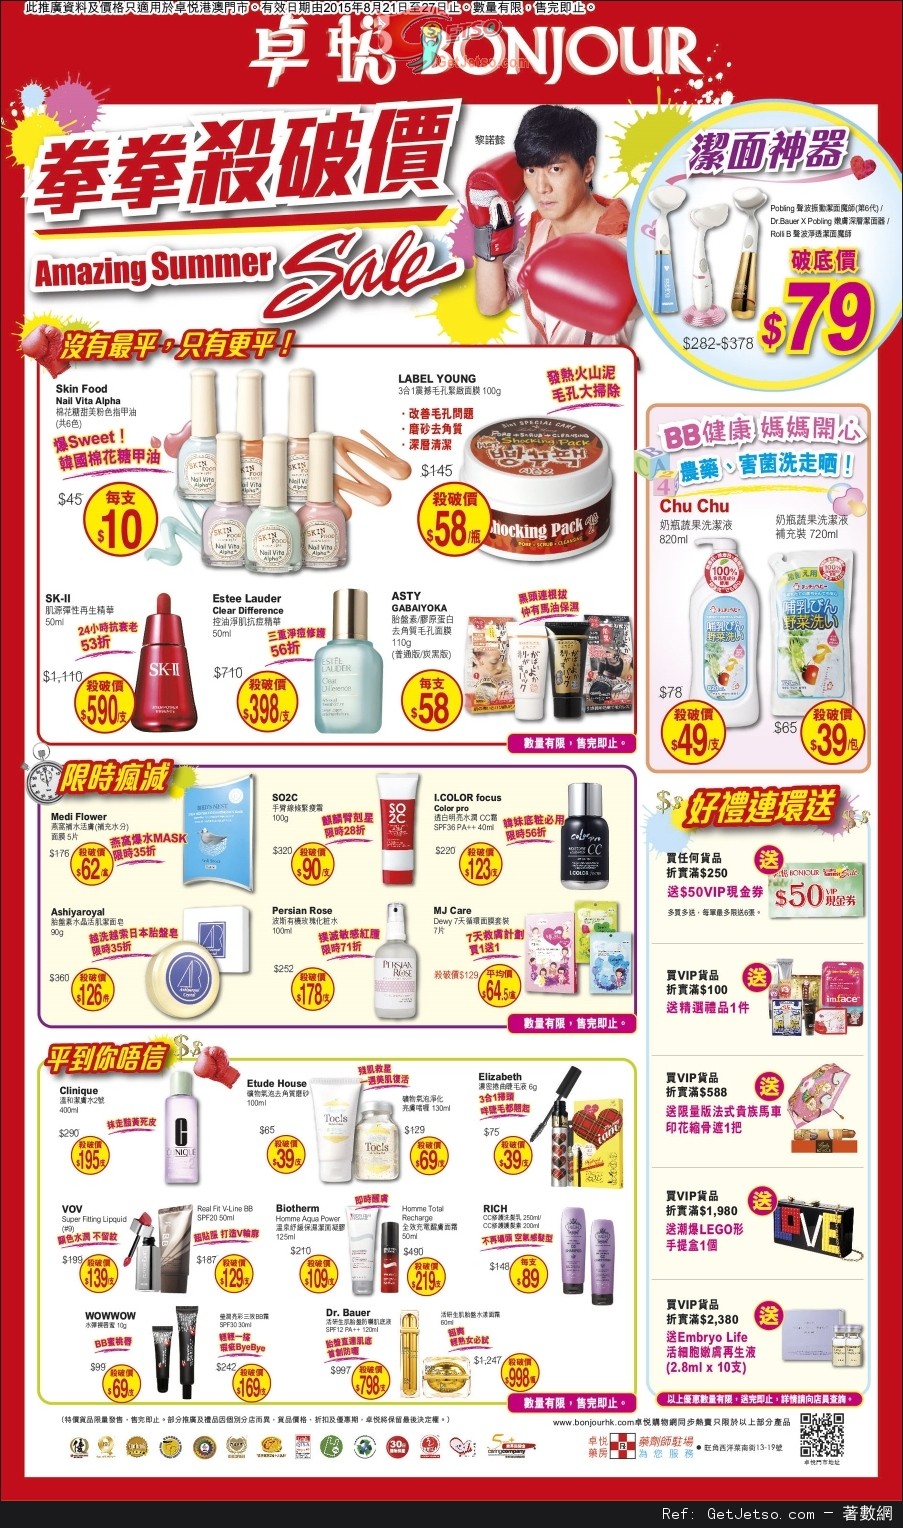 卓悅Amazing Summer Sale 購物優惠(至15年8月27日)圖片1